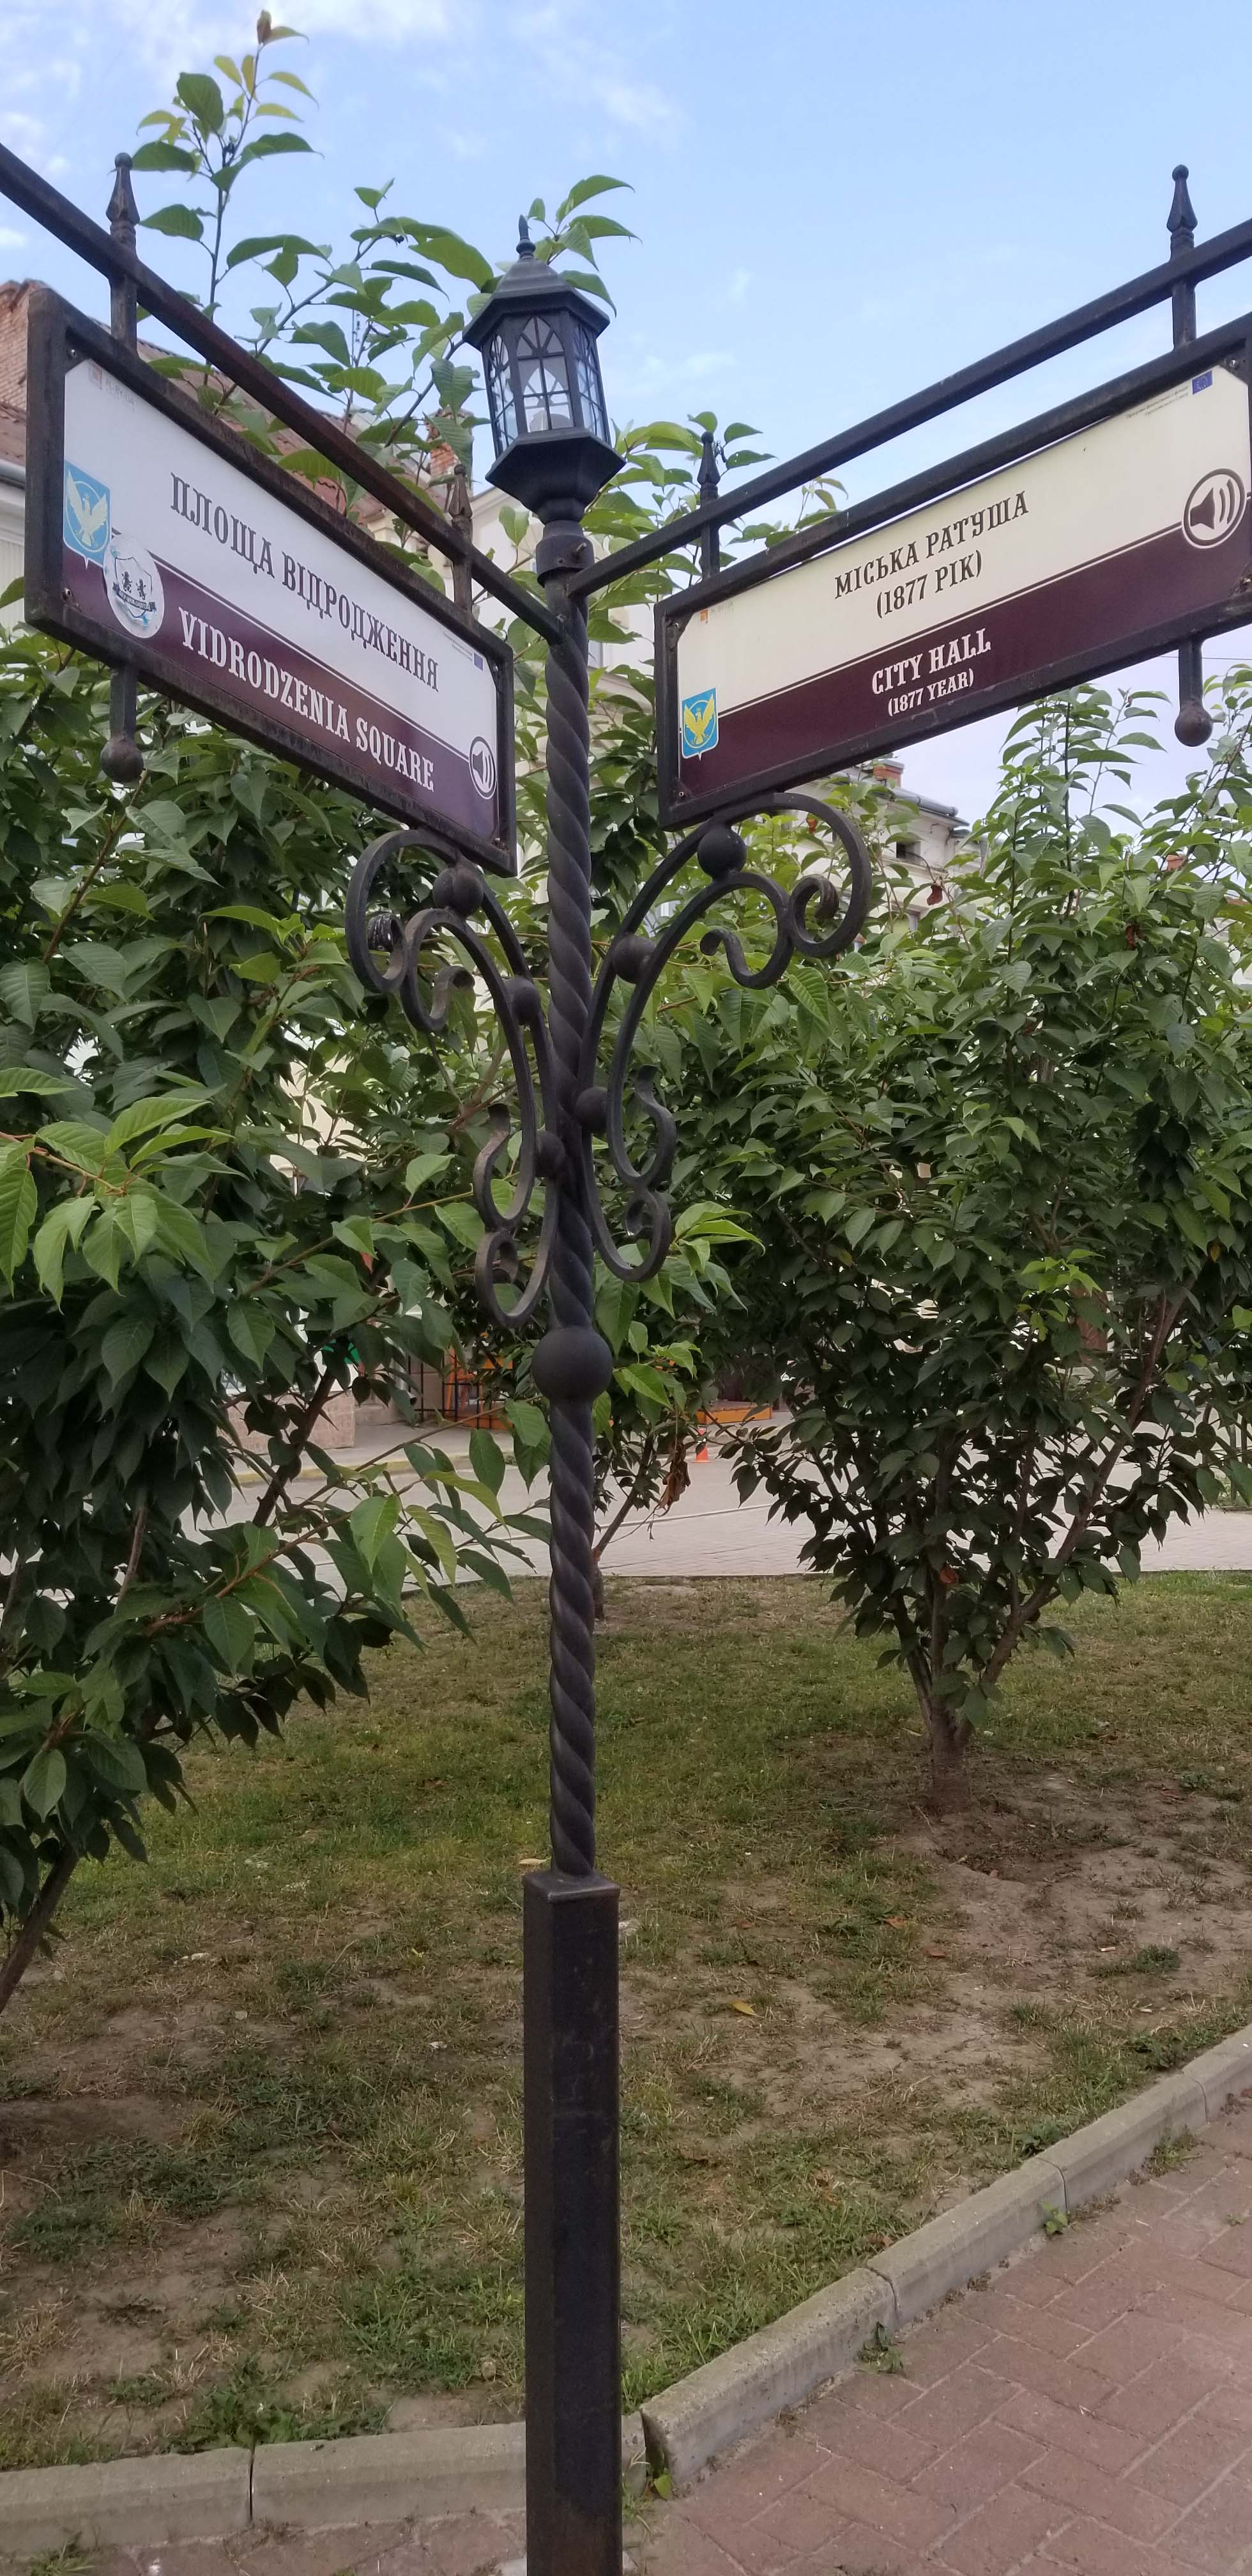 Street sign with City Hall and Vidrodzenia
                  Square